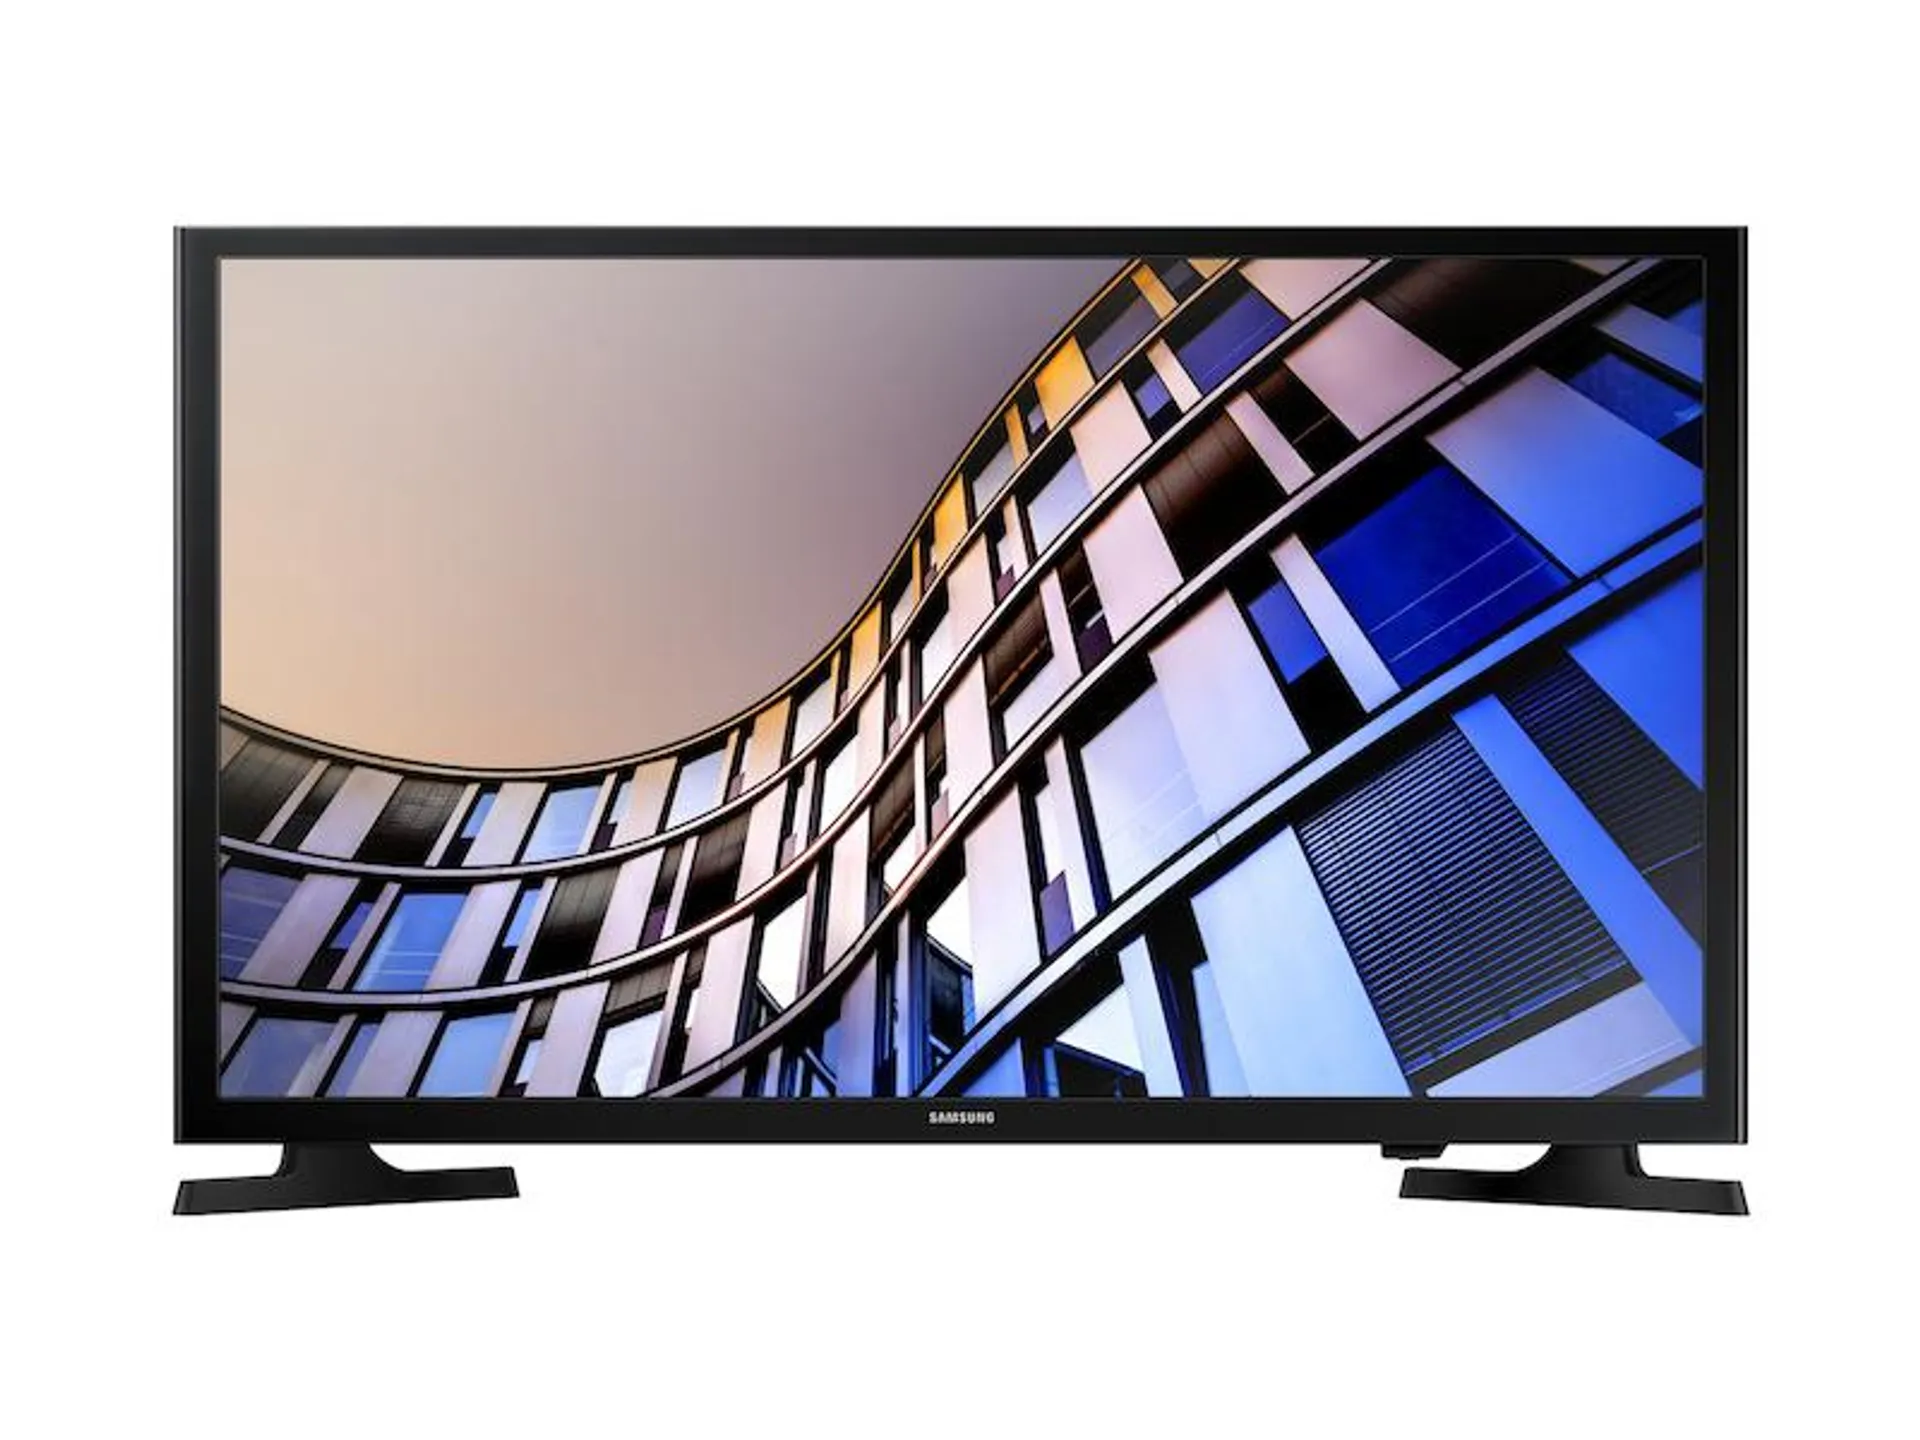 M4500 HD TV